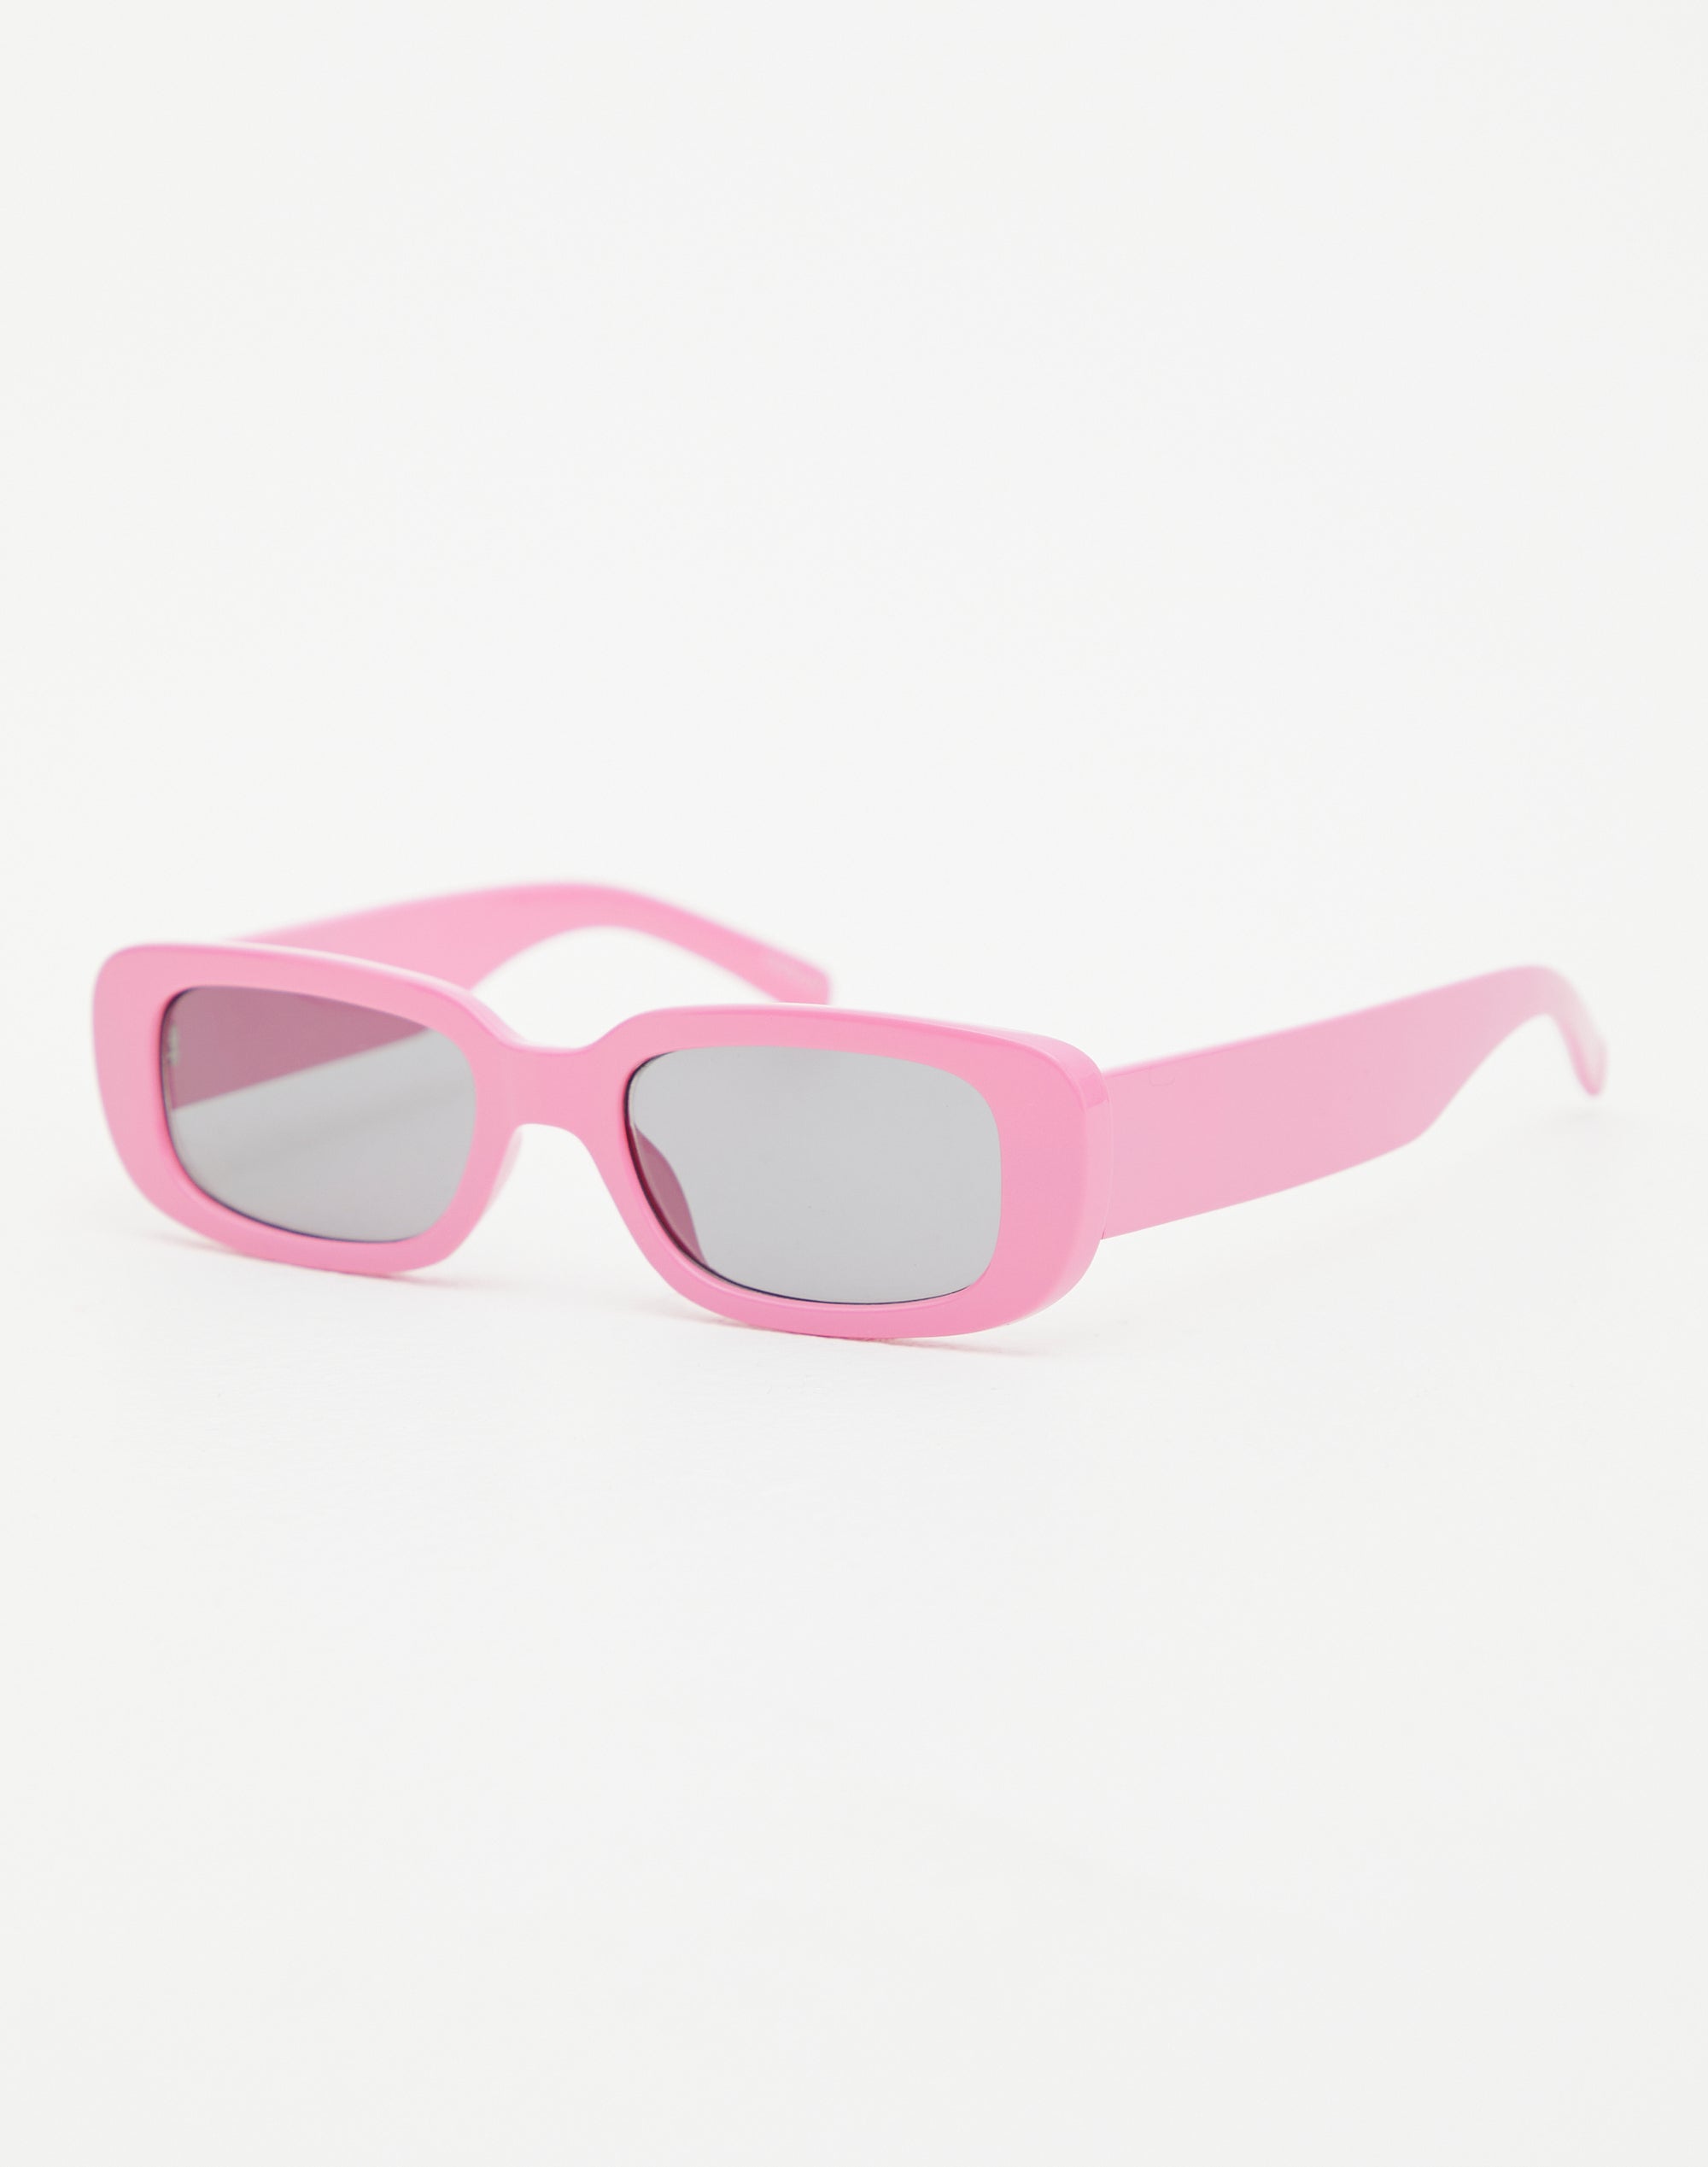 Blue Pink Faded Lens Square Frameless Sunglasses | PrettyLittleThing